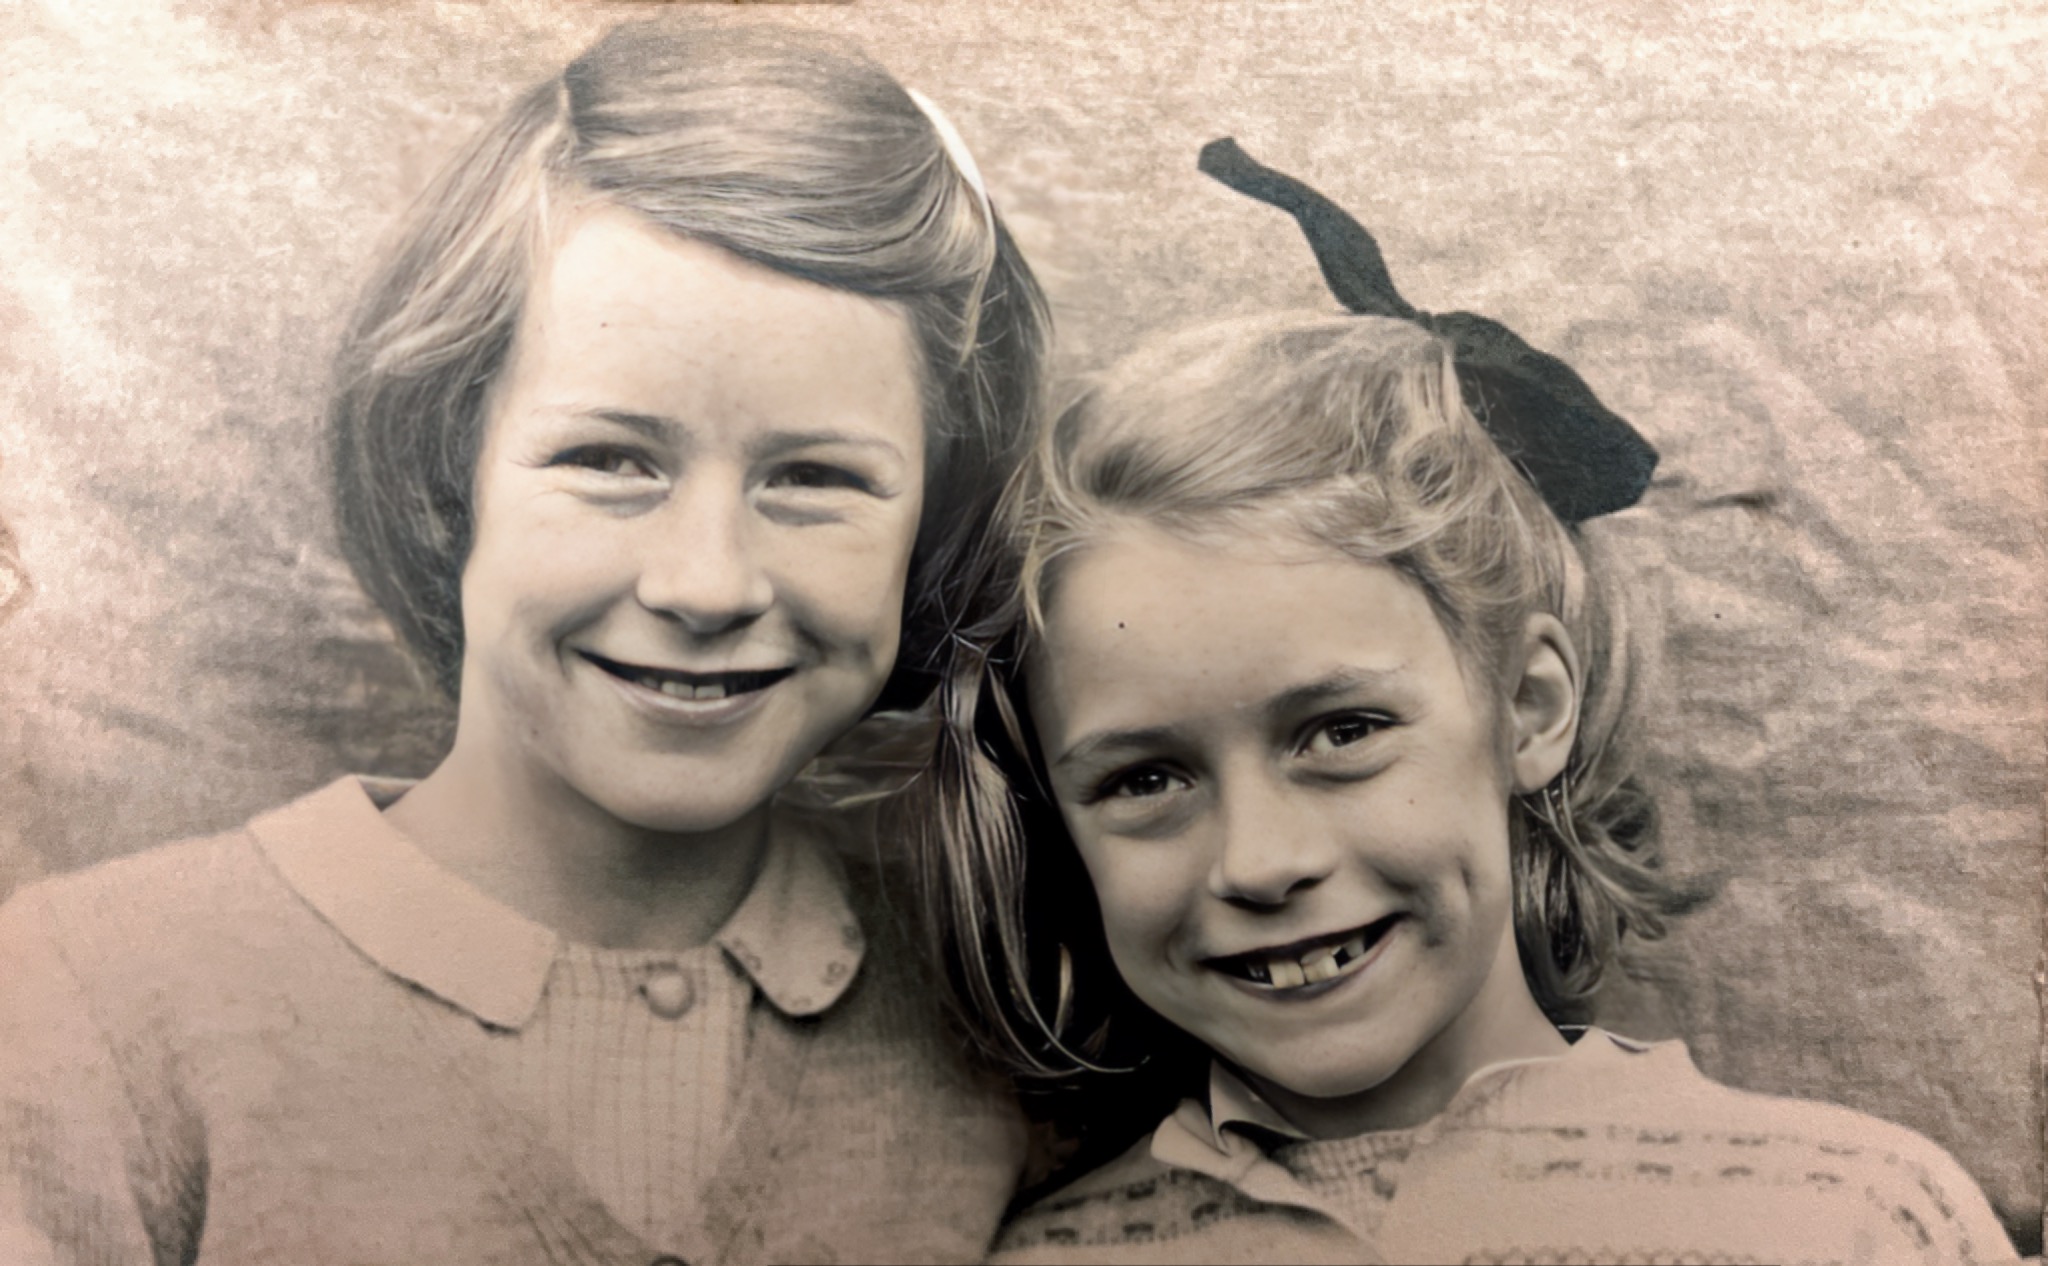 Sheelagh Leonard (left) Jane Leonard (right) Year 1952